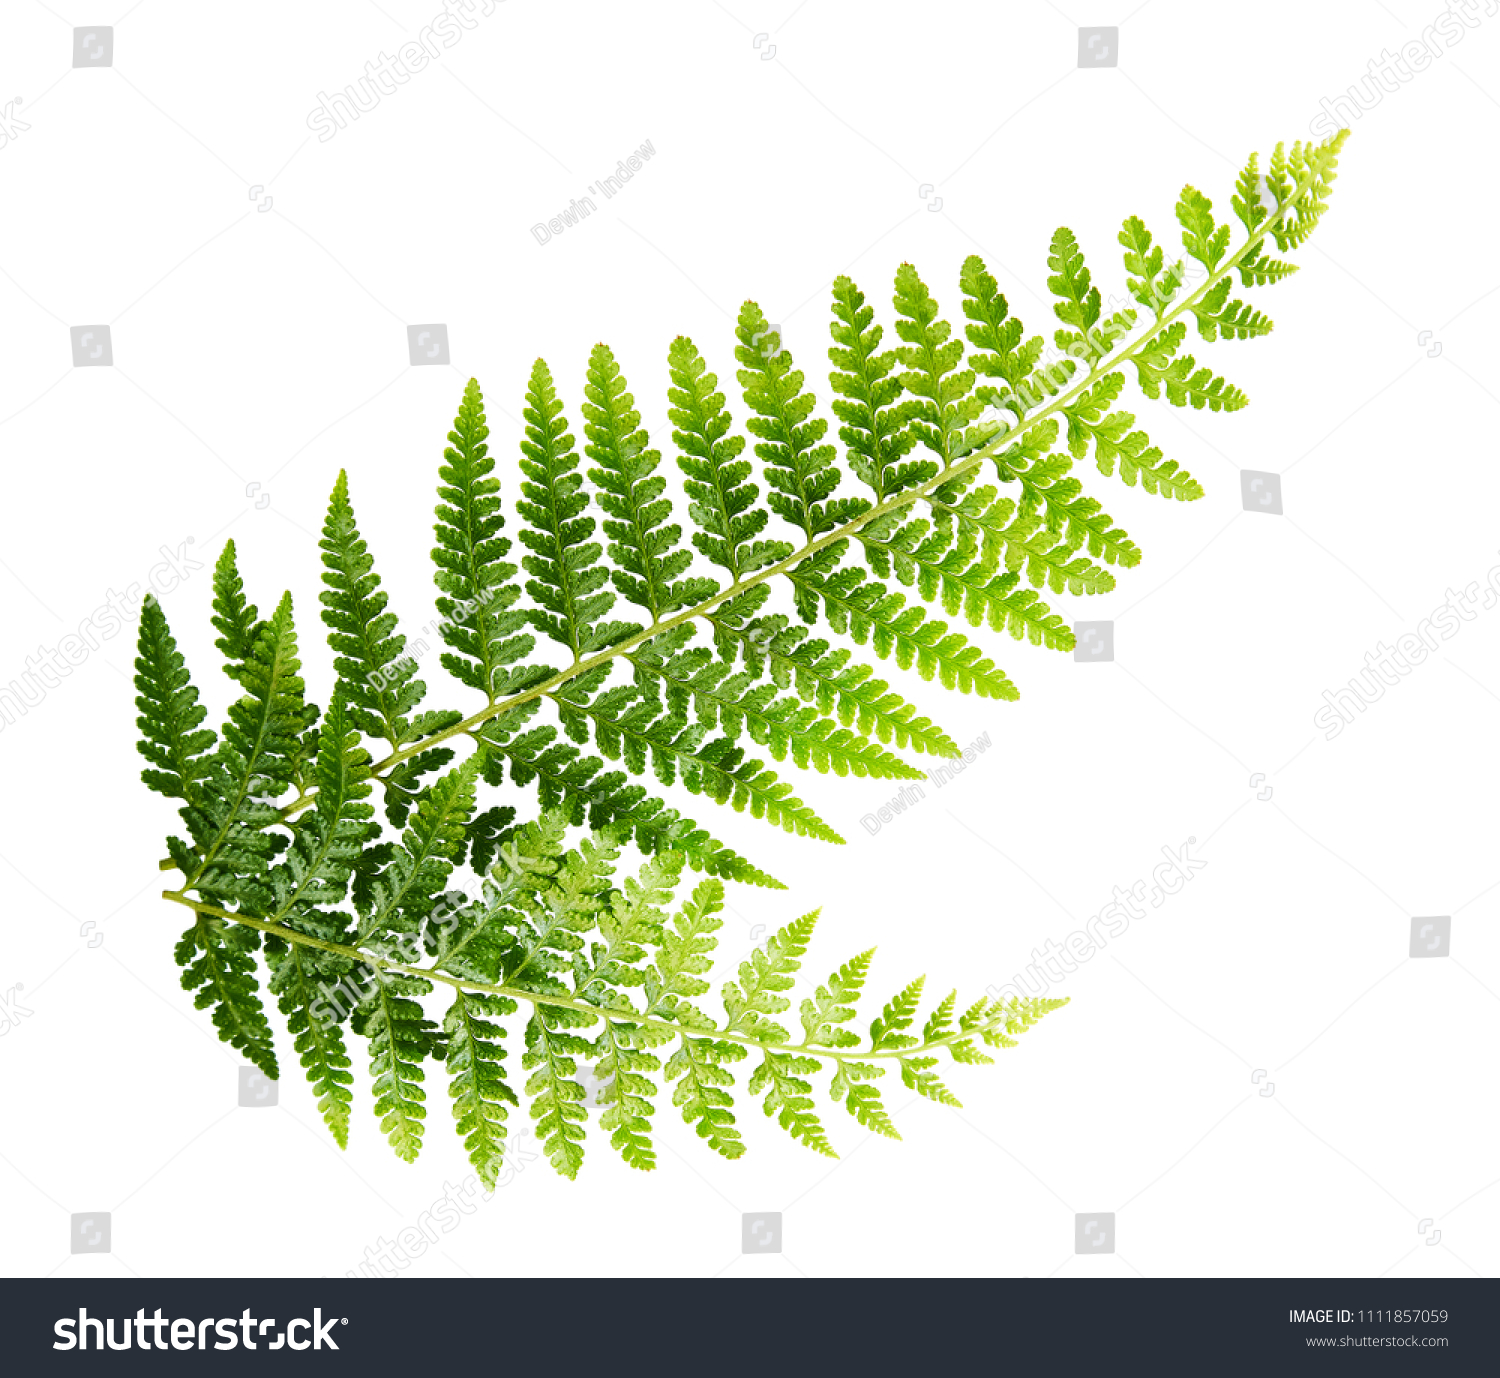 Fern leaf, Ornamental foliage, Fern isolated on white background, with clipping path #1111857059